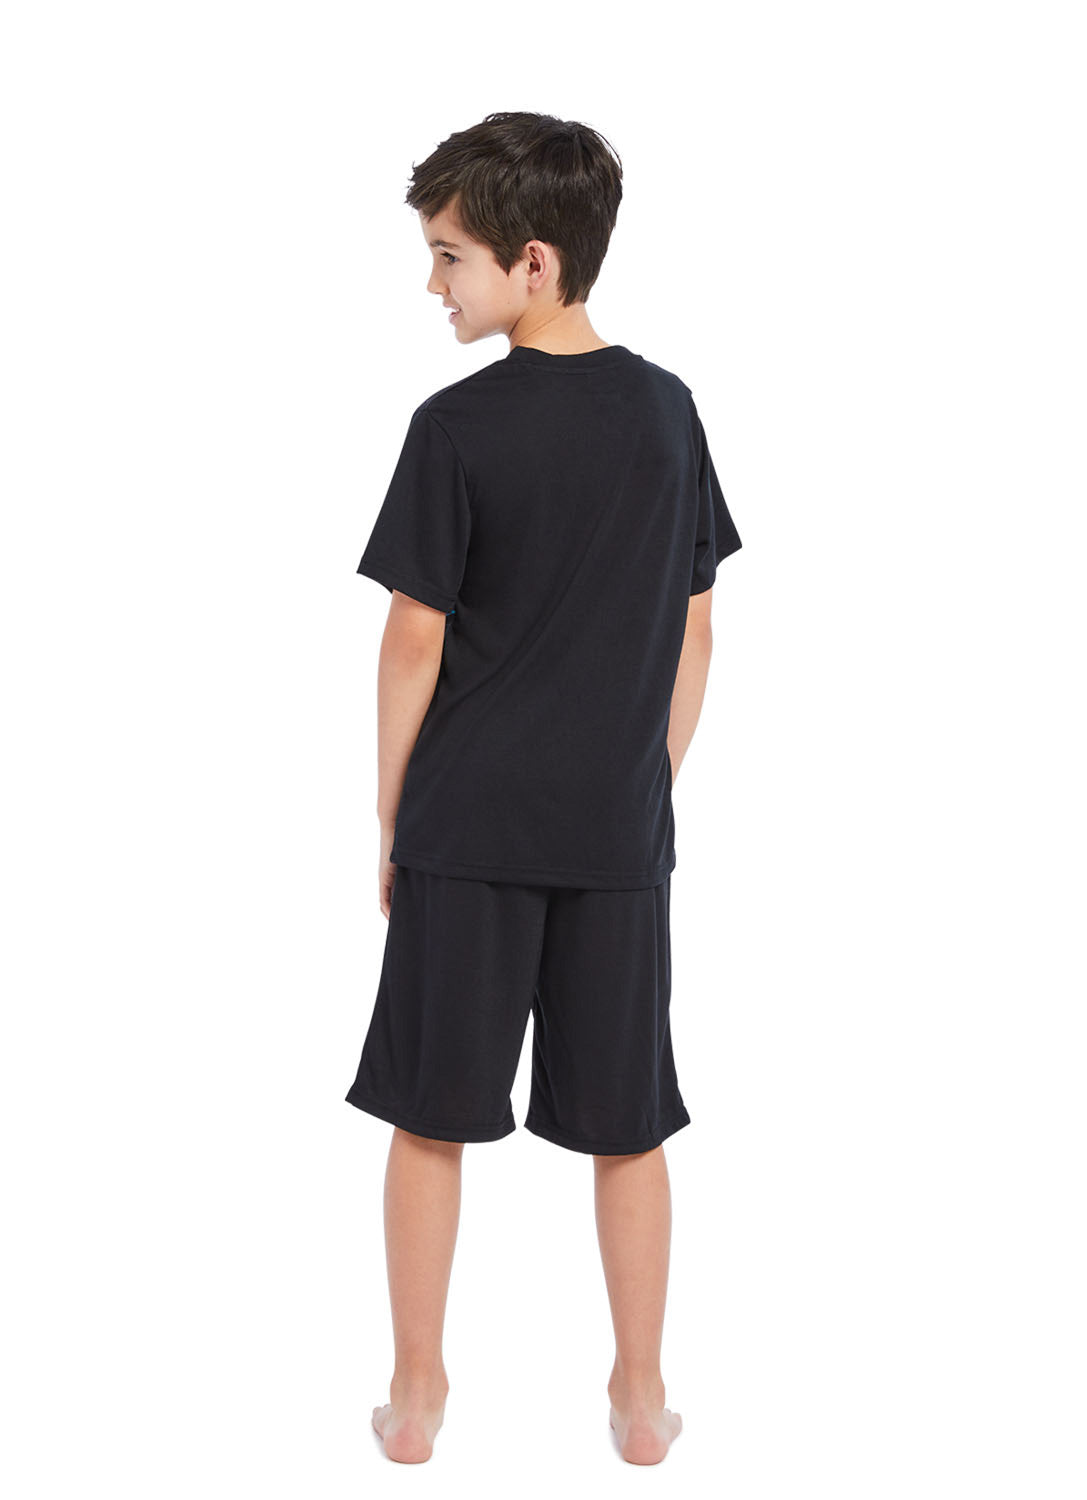 Back view Boy wearing Pj set Car, t-shirt (black) and shorts (black)